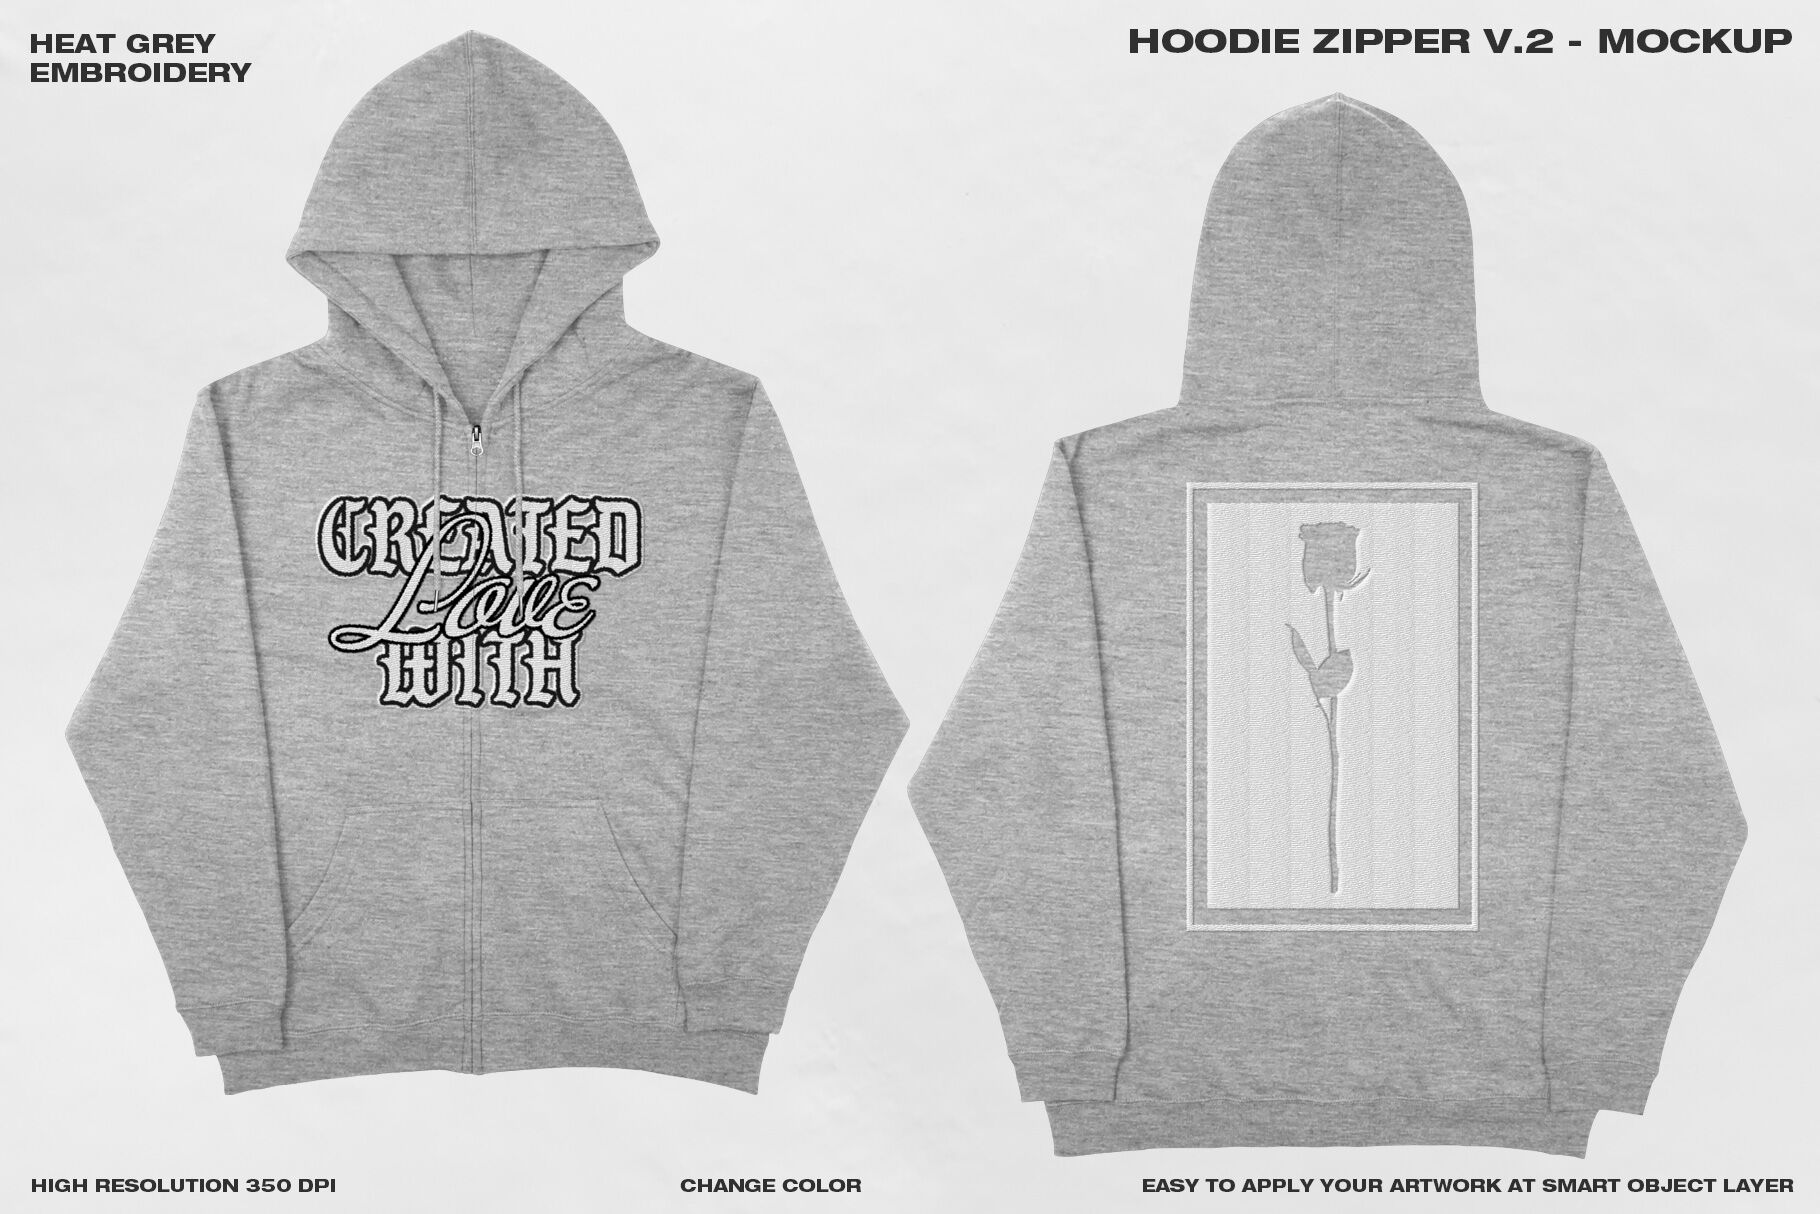 Hoodie Zipper V.2 - Mockup By daldsgh | TheHungryJPEG